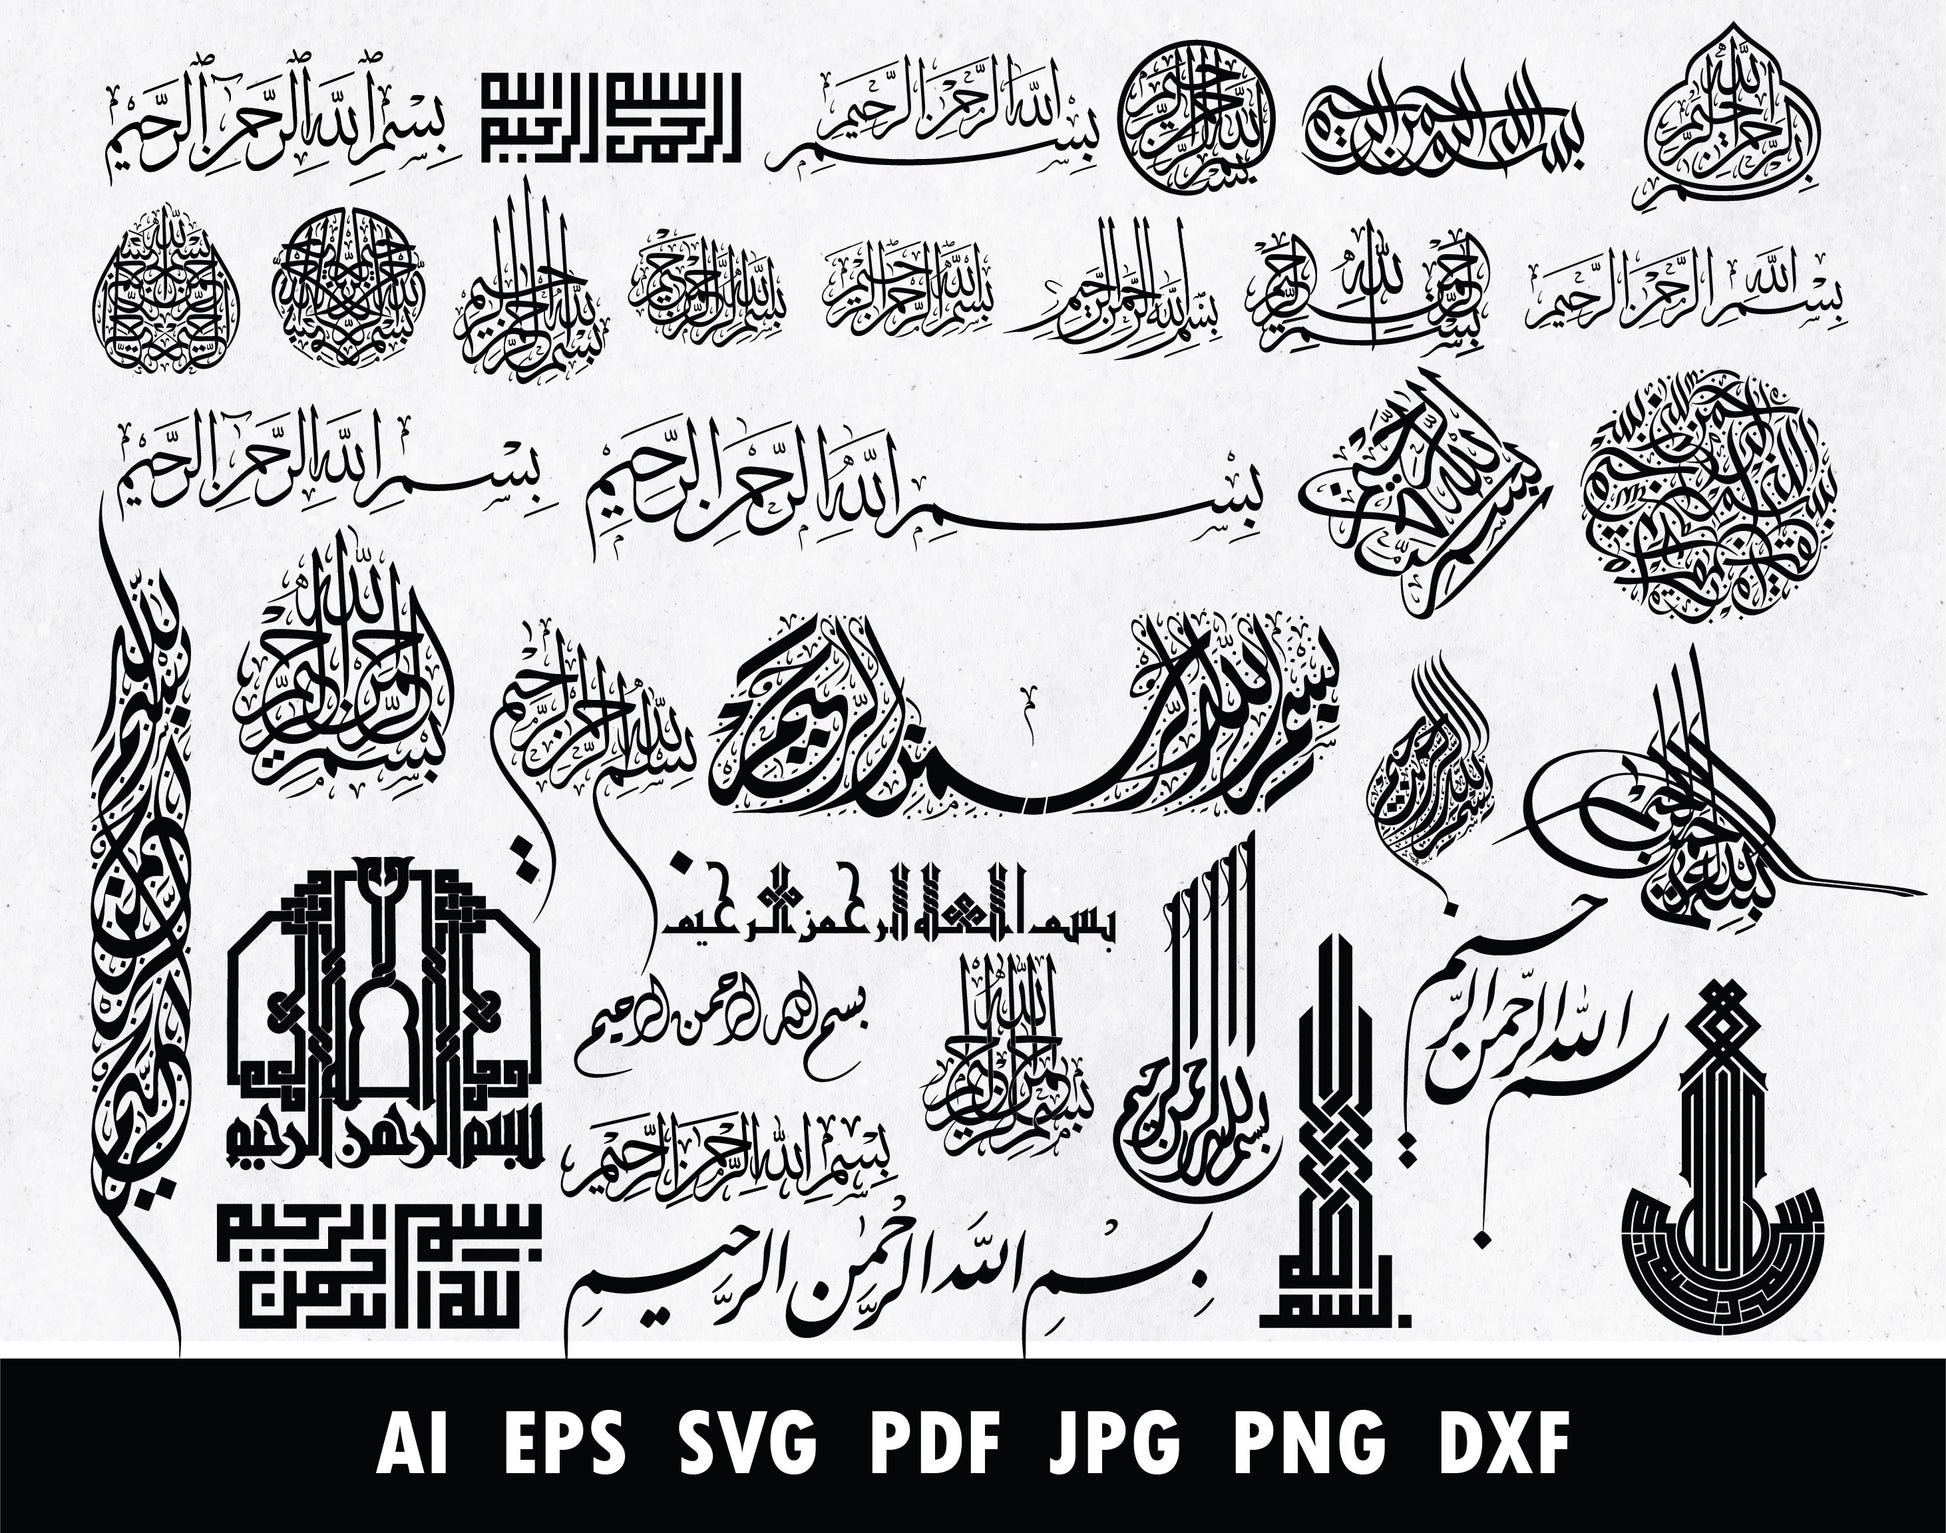 bismillah calligraphy vector